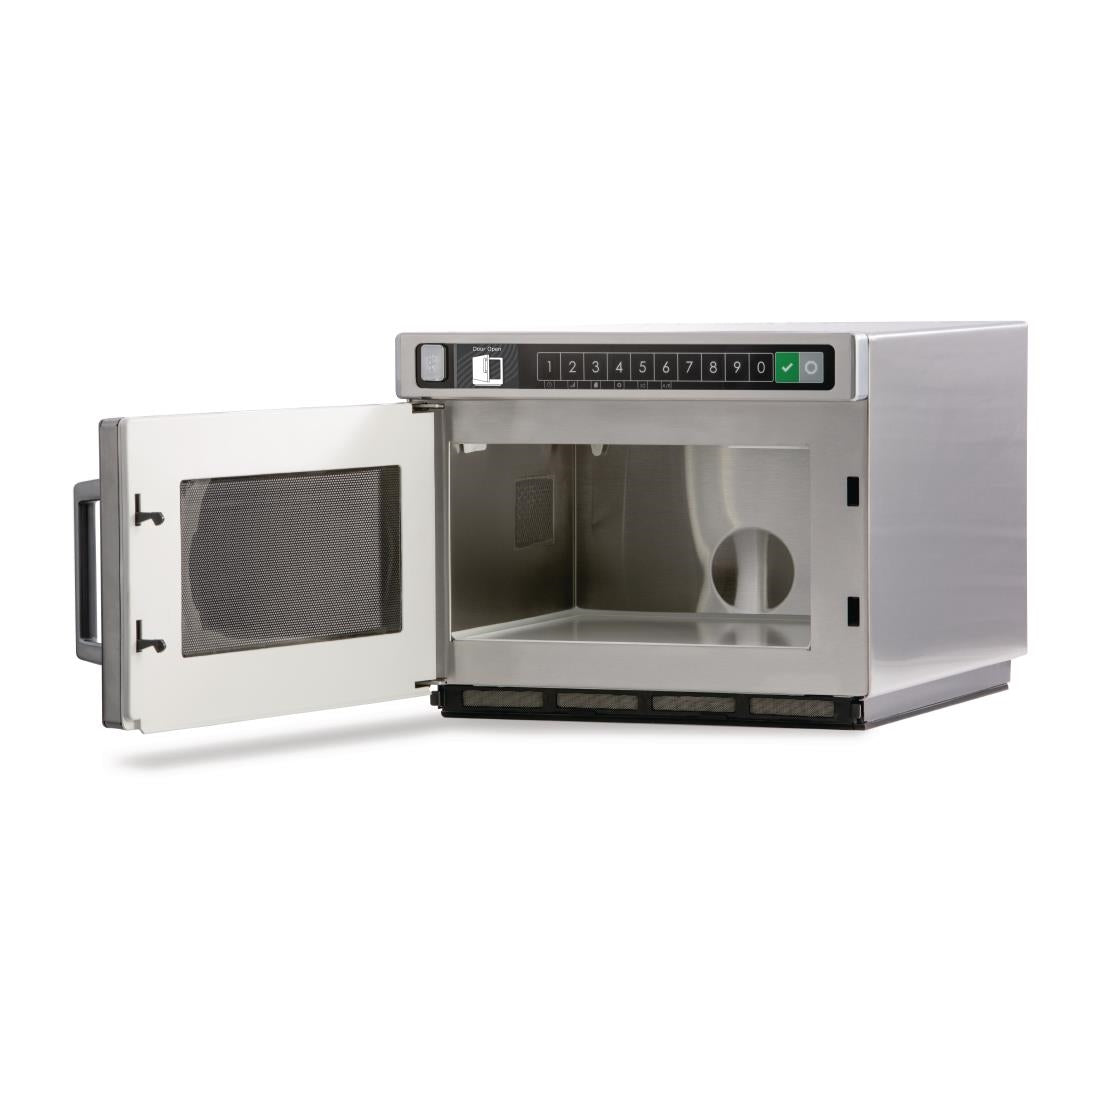 Menumaster Heavy Duty Compact Microwave DEC14E2 JD Catering Equipment Solutions Ltd